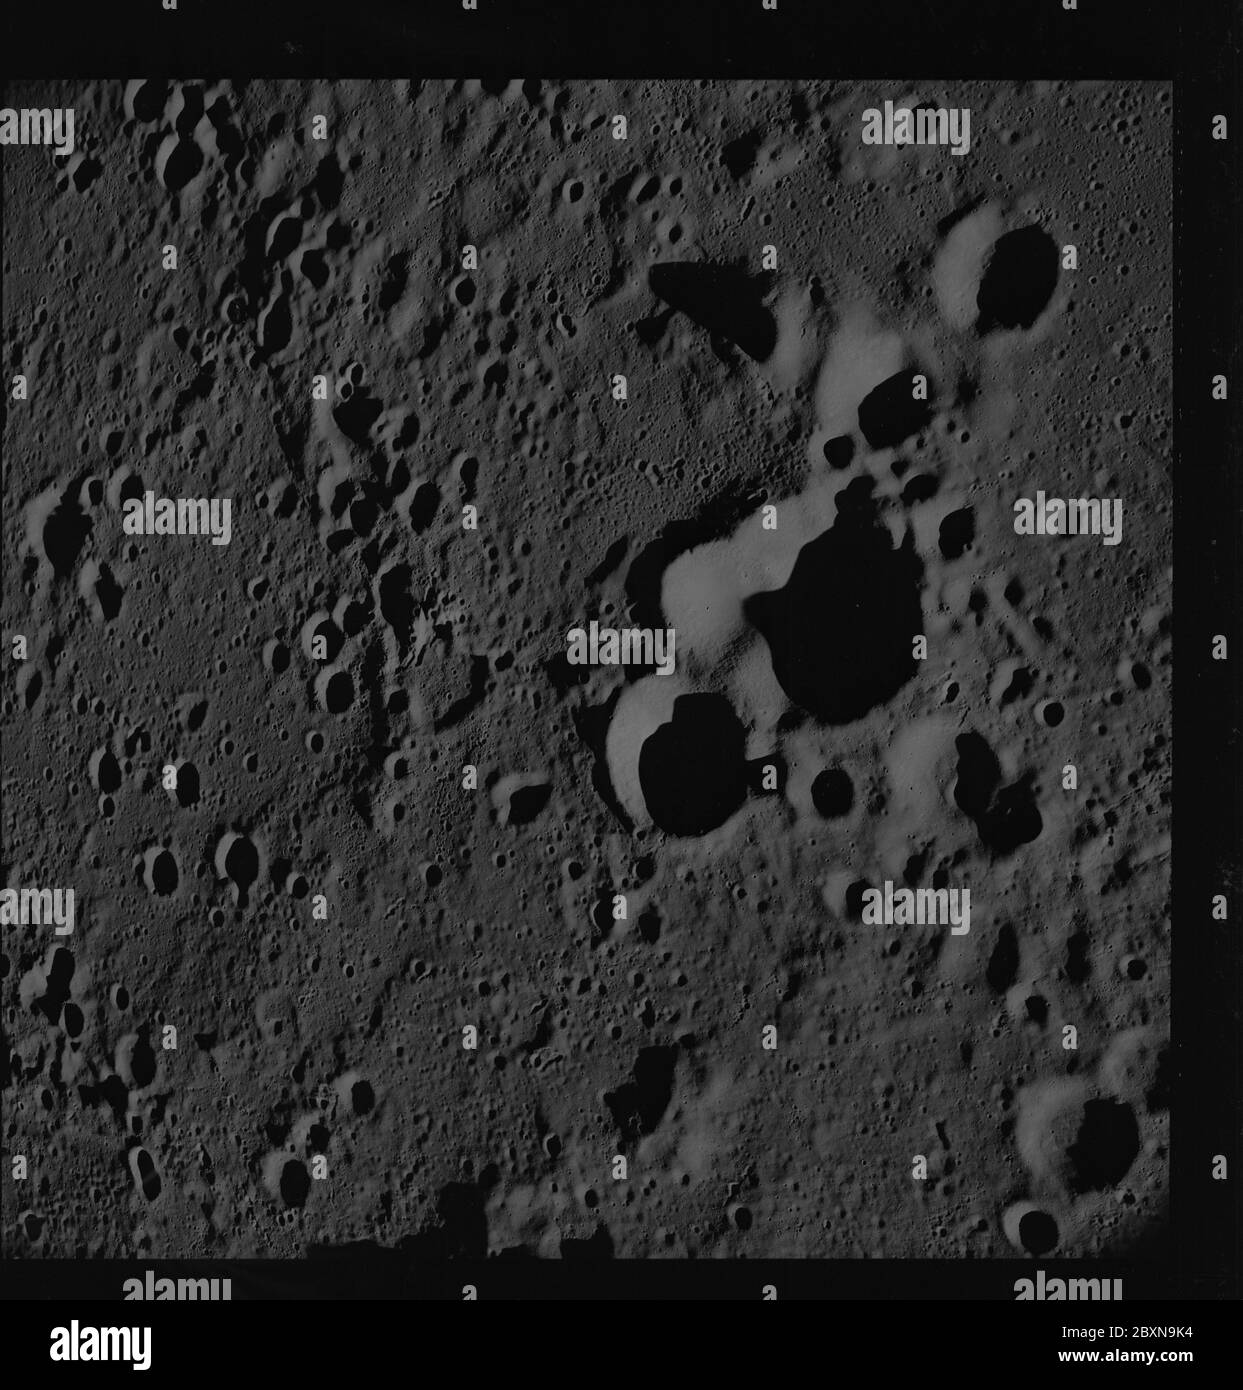 AS08-17-2827 - Apollo 8 - Apollo 8 Mission image, Lune, farside America,  T/O 11; portée et contenu: La base de données originale décrit ceci comme:  Description: Apollo 8,Lune, farside, America,cible d'opportunité (T/O)